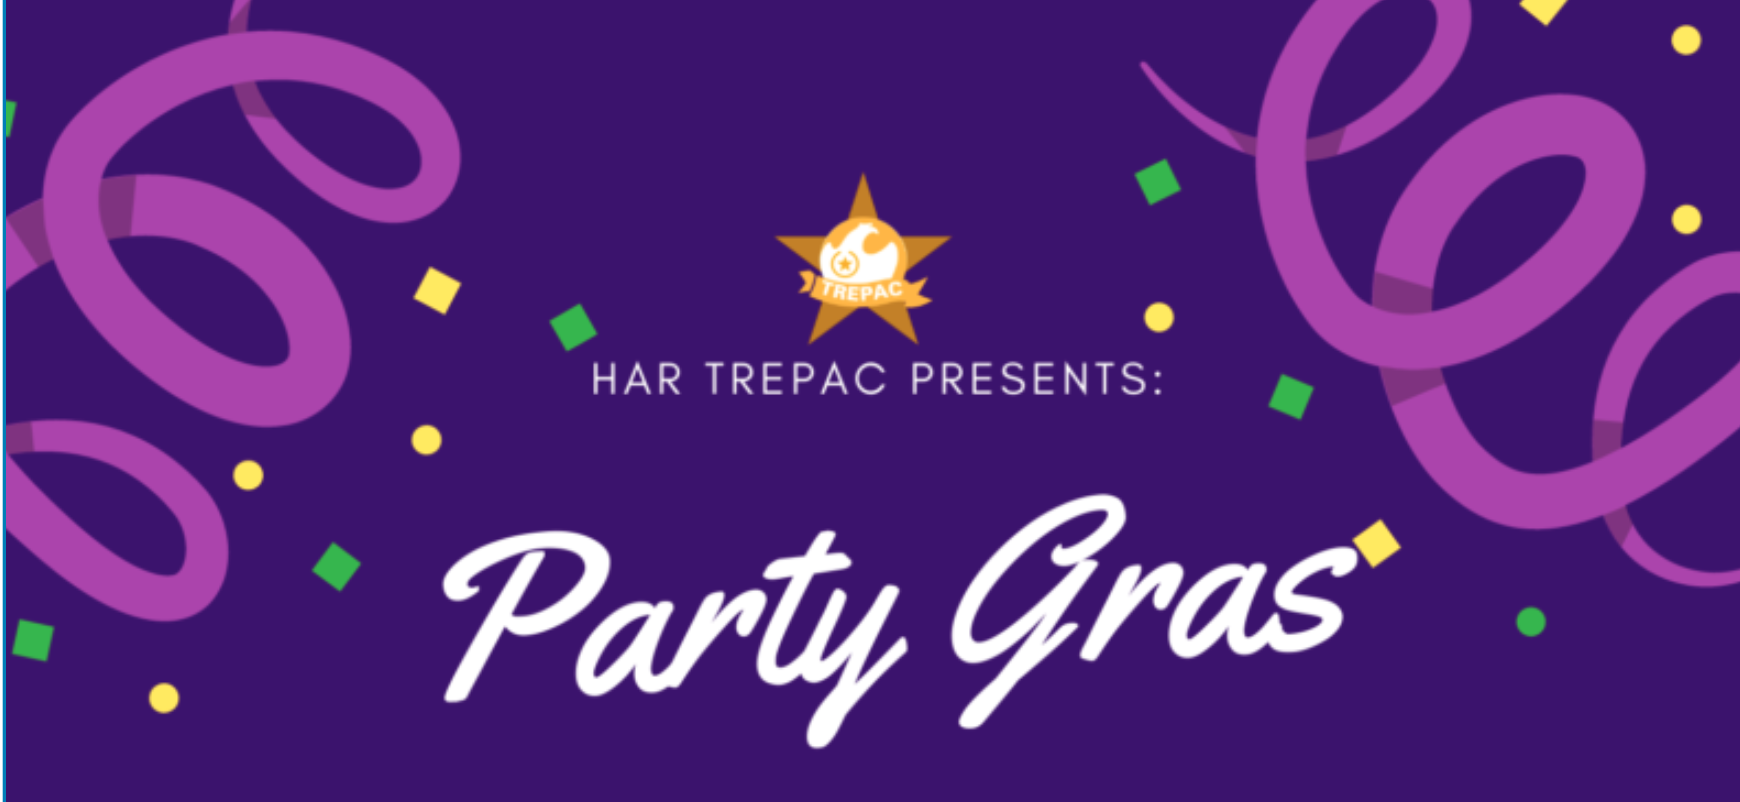 Mardi Gras is Around the Corner – PARTY GRAS with TREPAC!